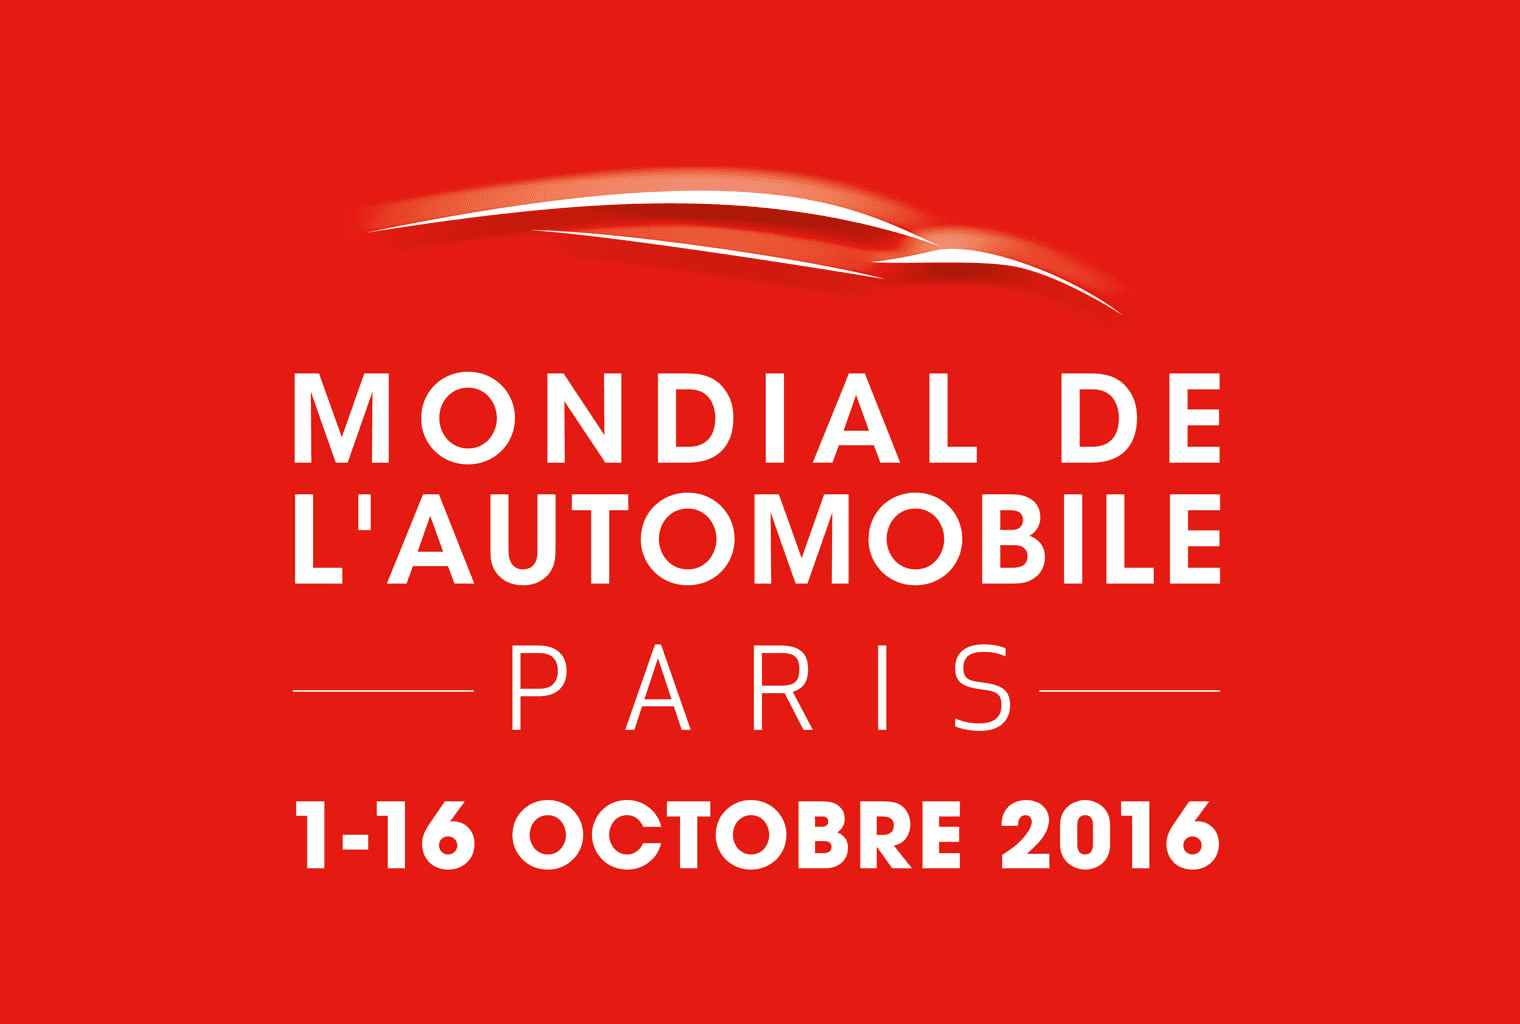 Paris Motor Show 2016